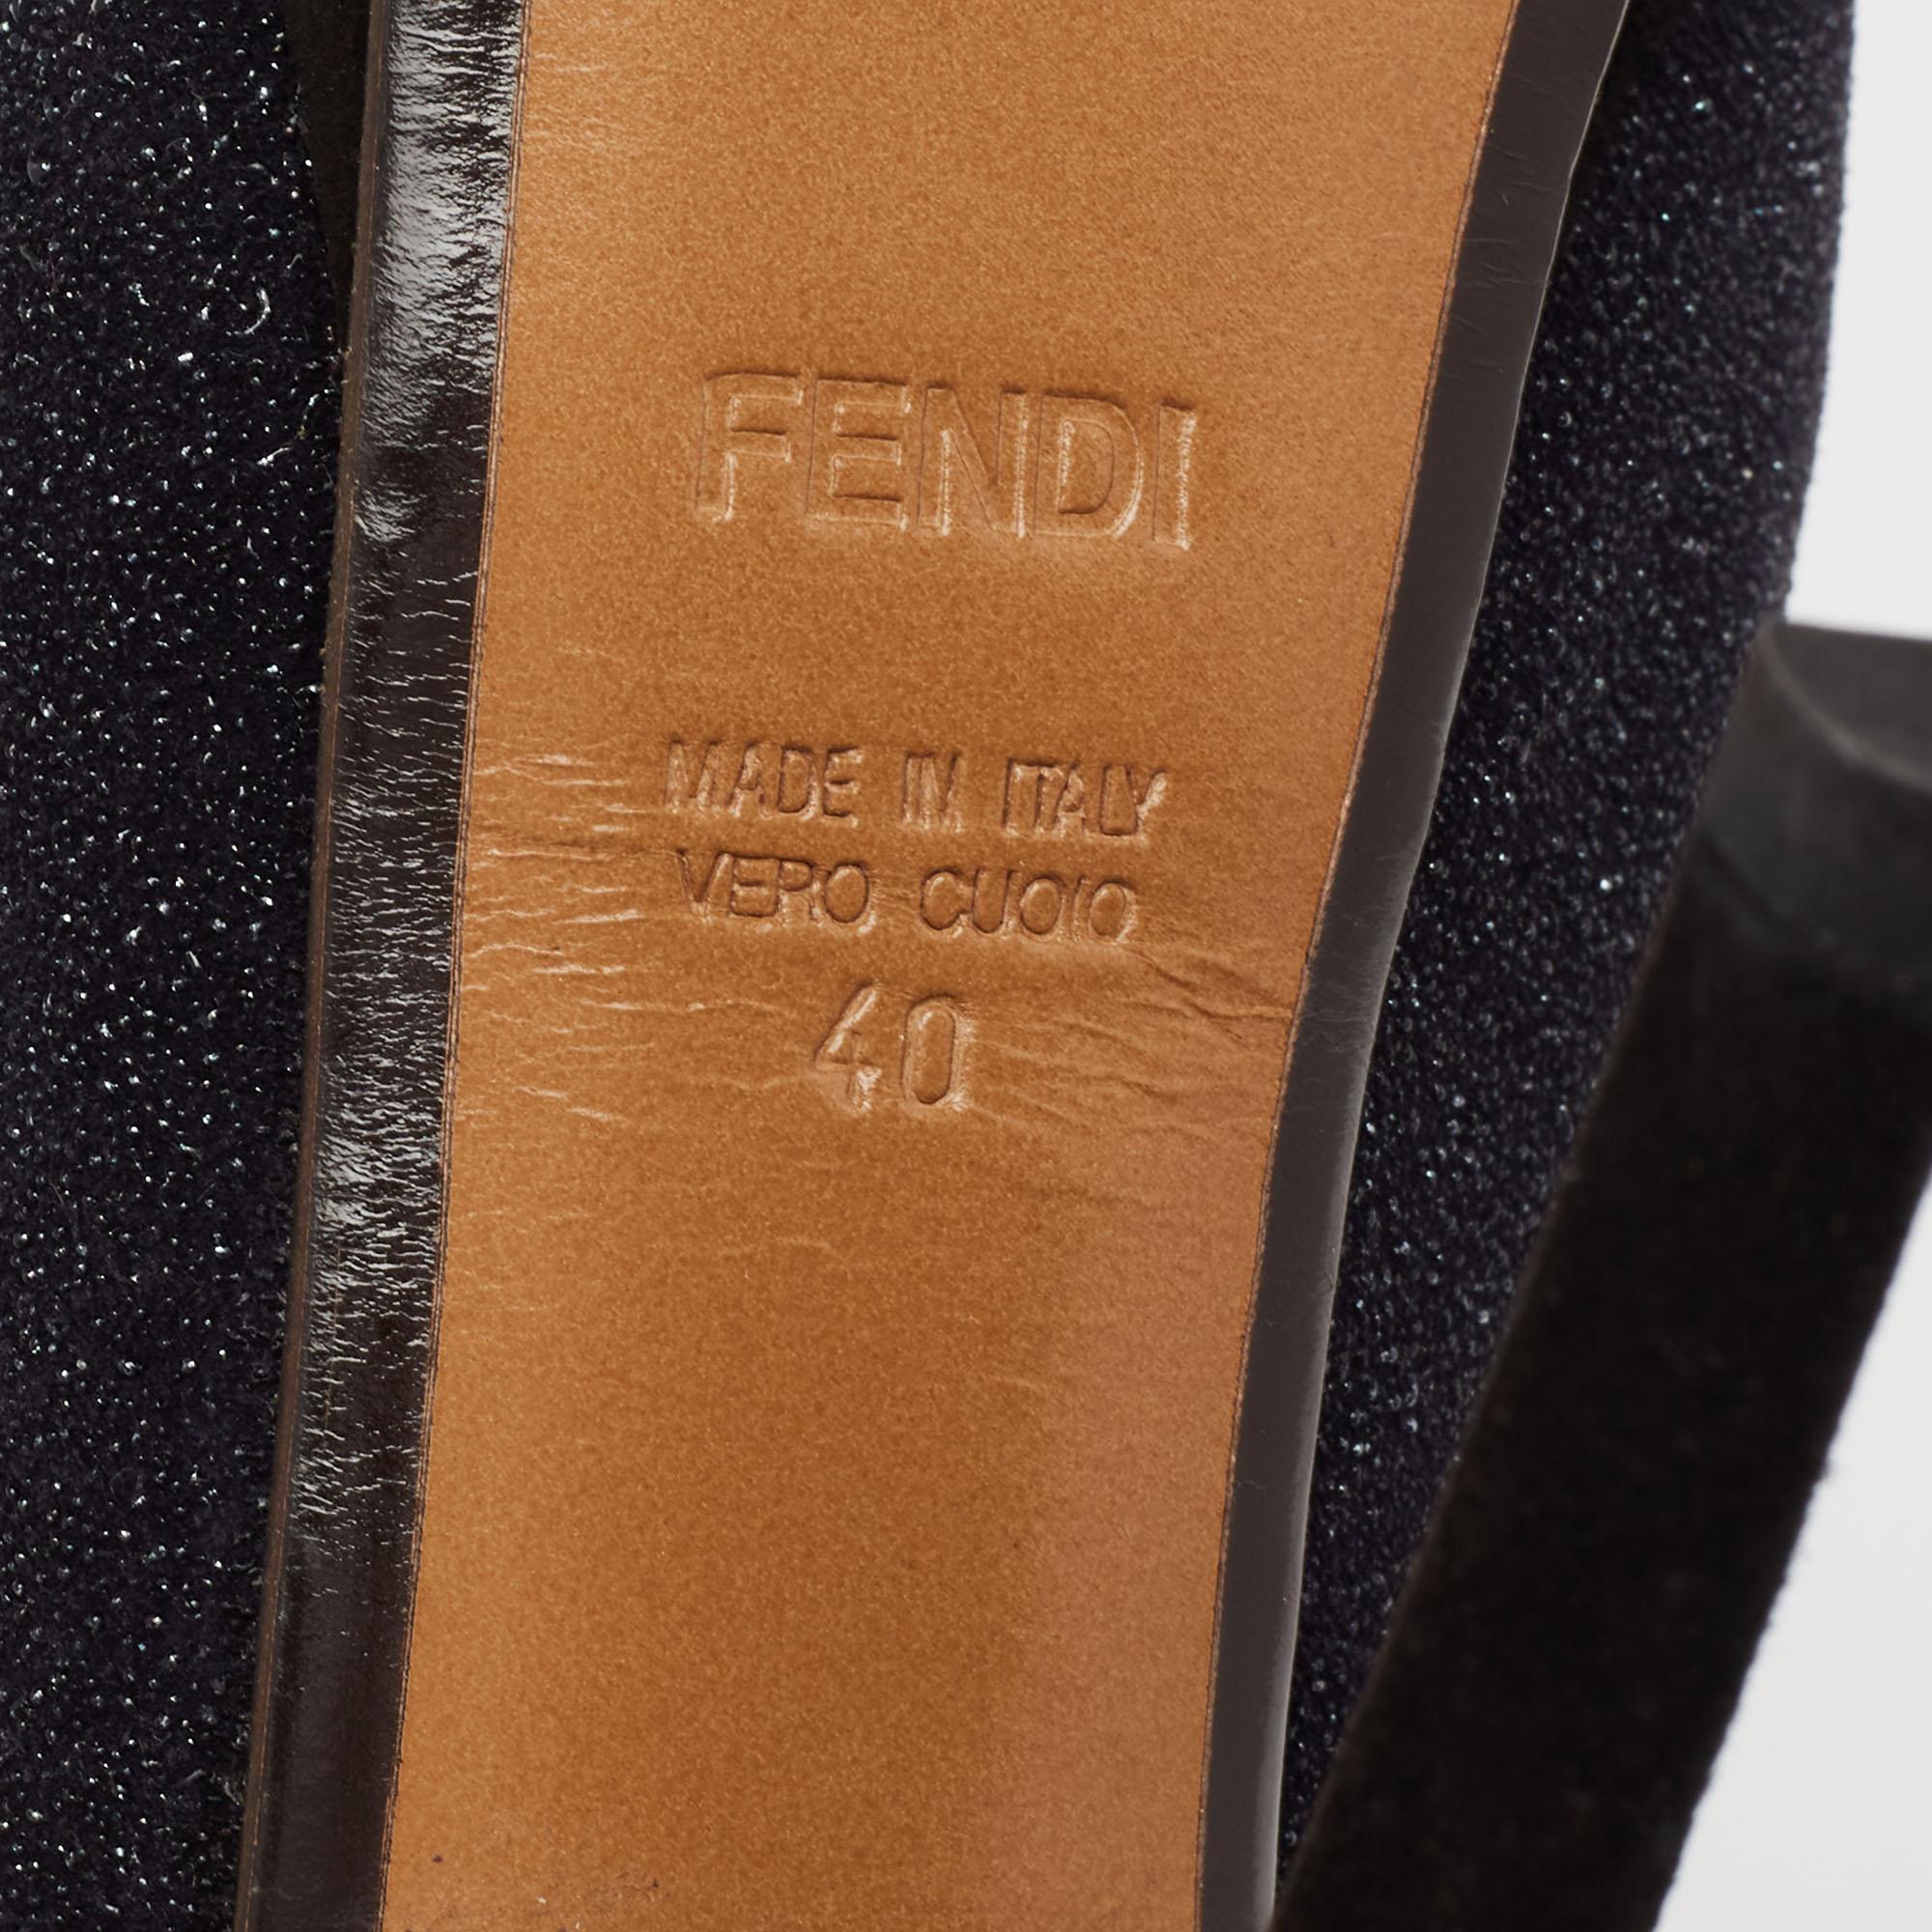 Fendi Navy Blue/Black Glitter And Suede Platform Ankle Strap Pumps Size 40 3